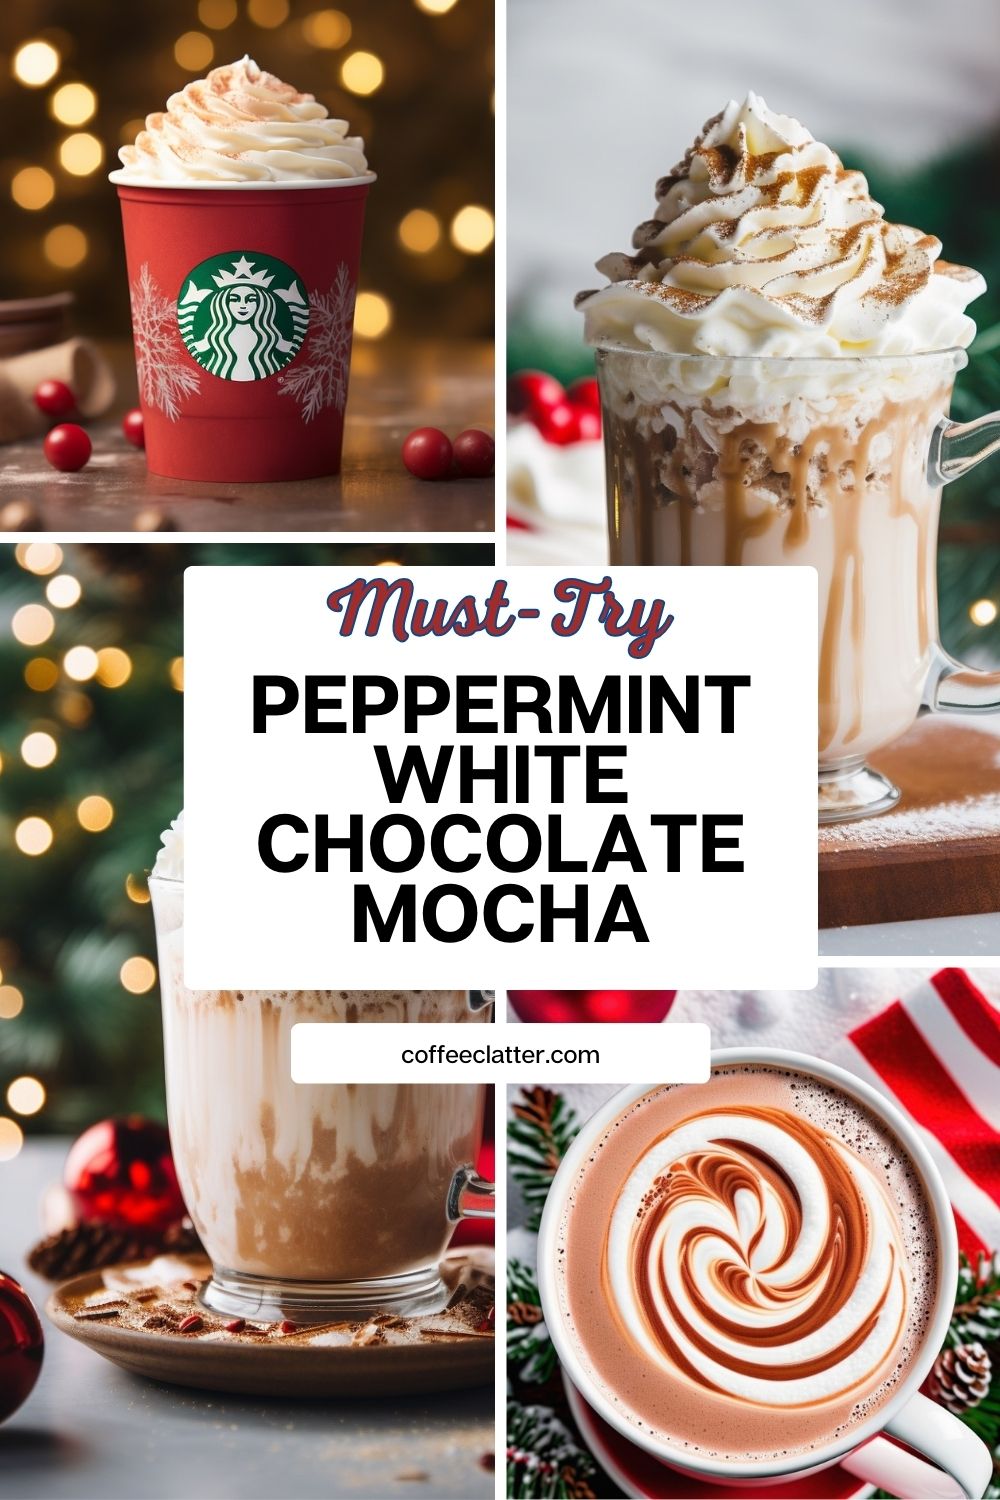 Peppermint white chocolate mocha Starbucks recipe copycat